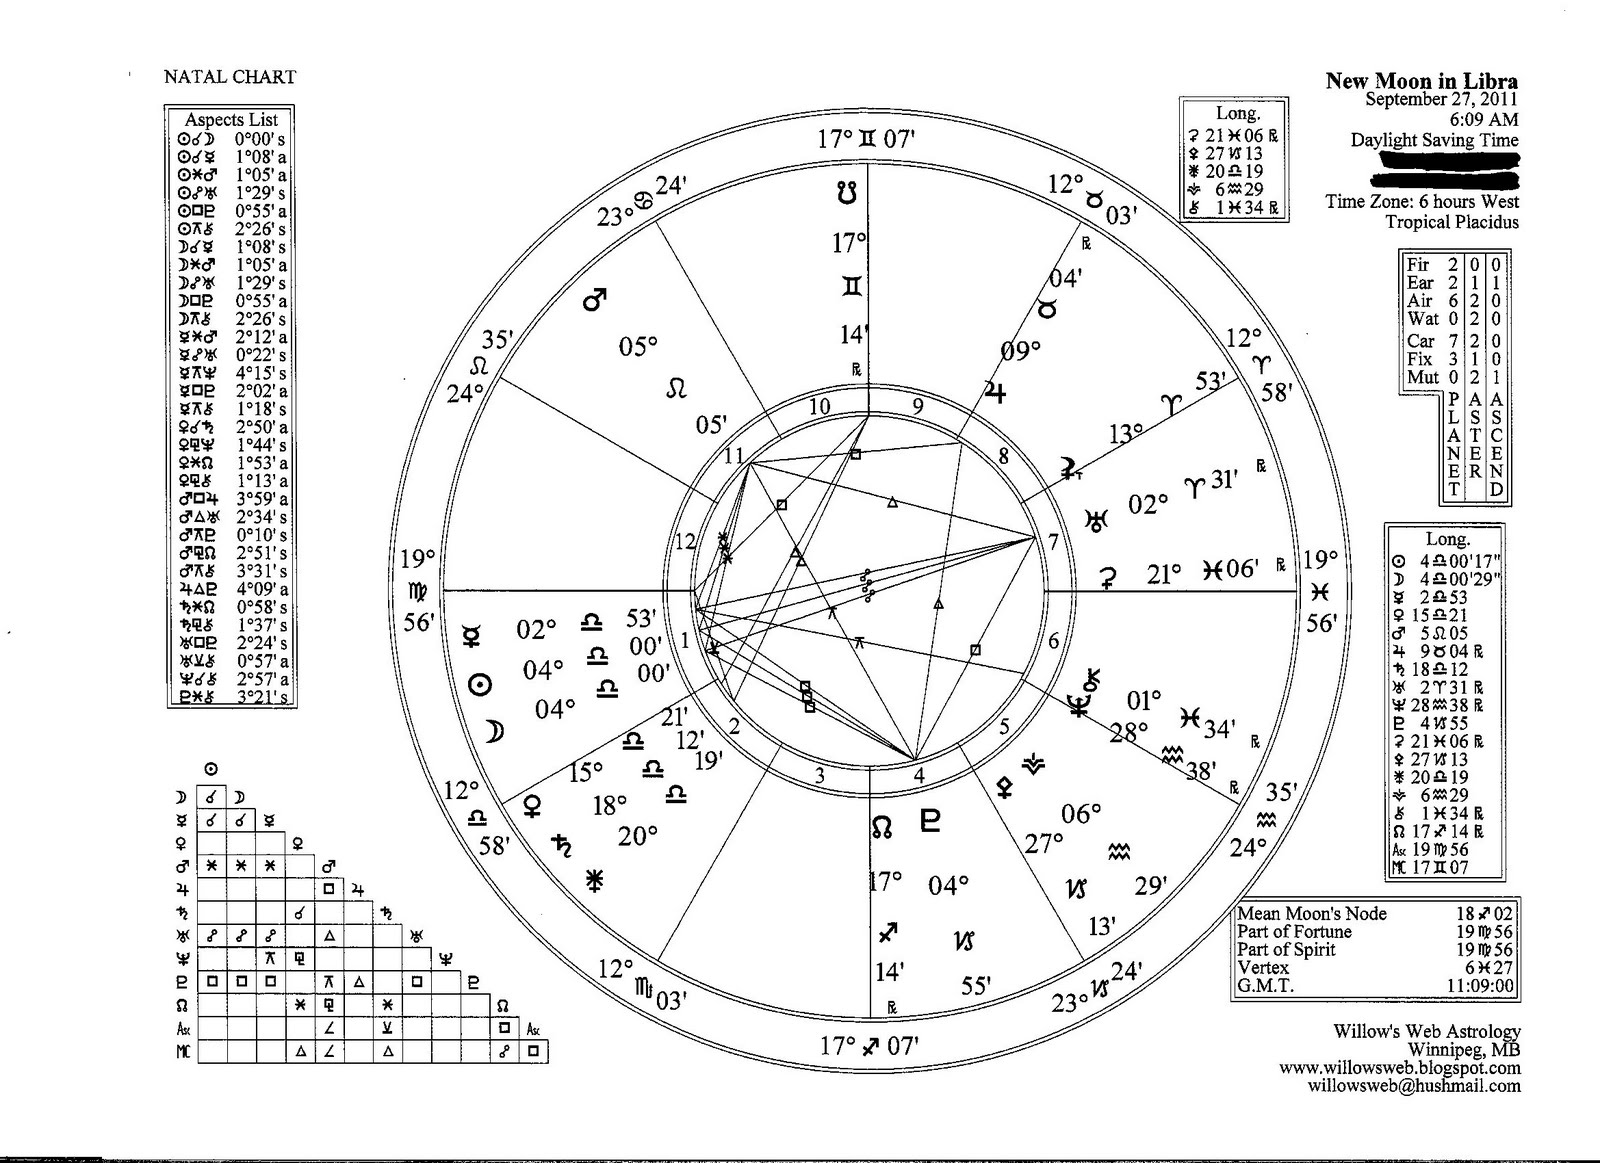 Willow's Web Astrology: September 2011